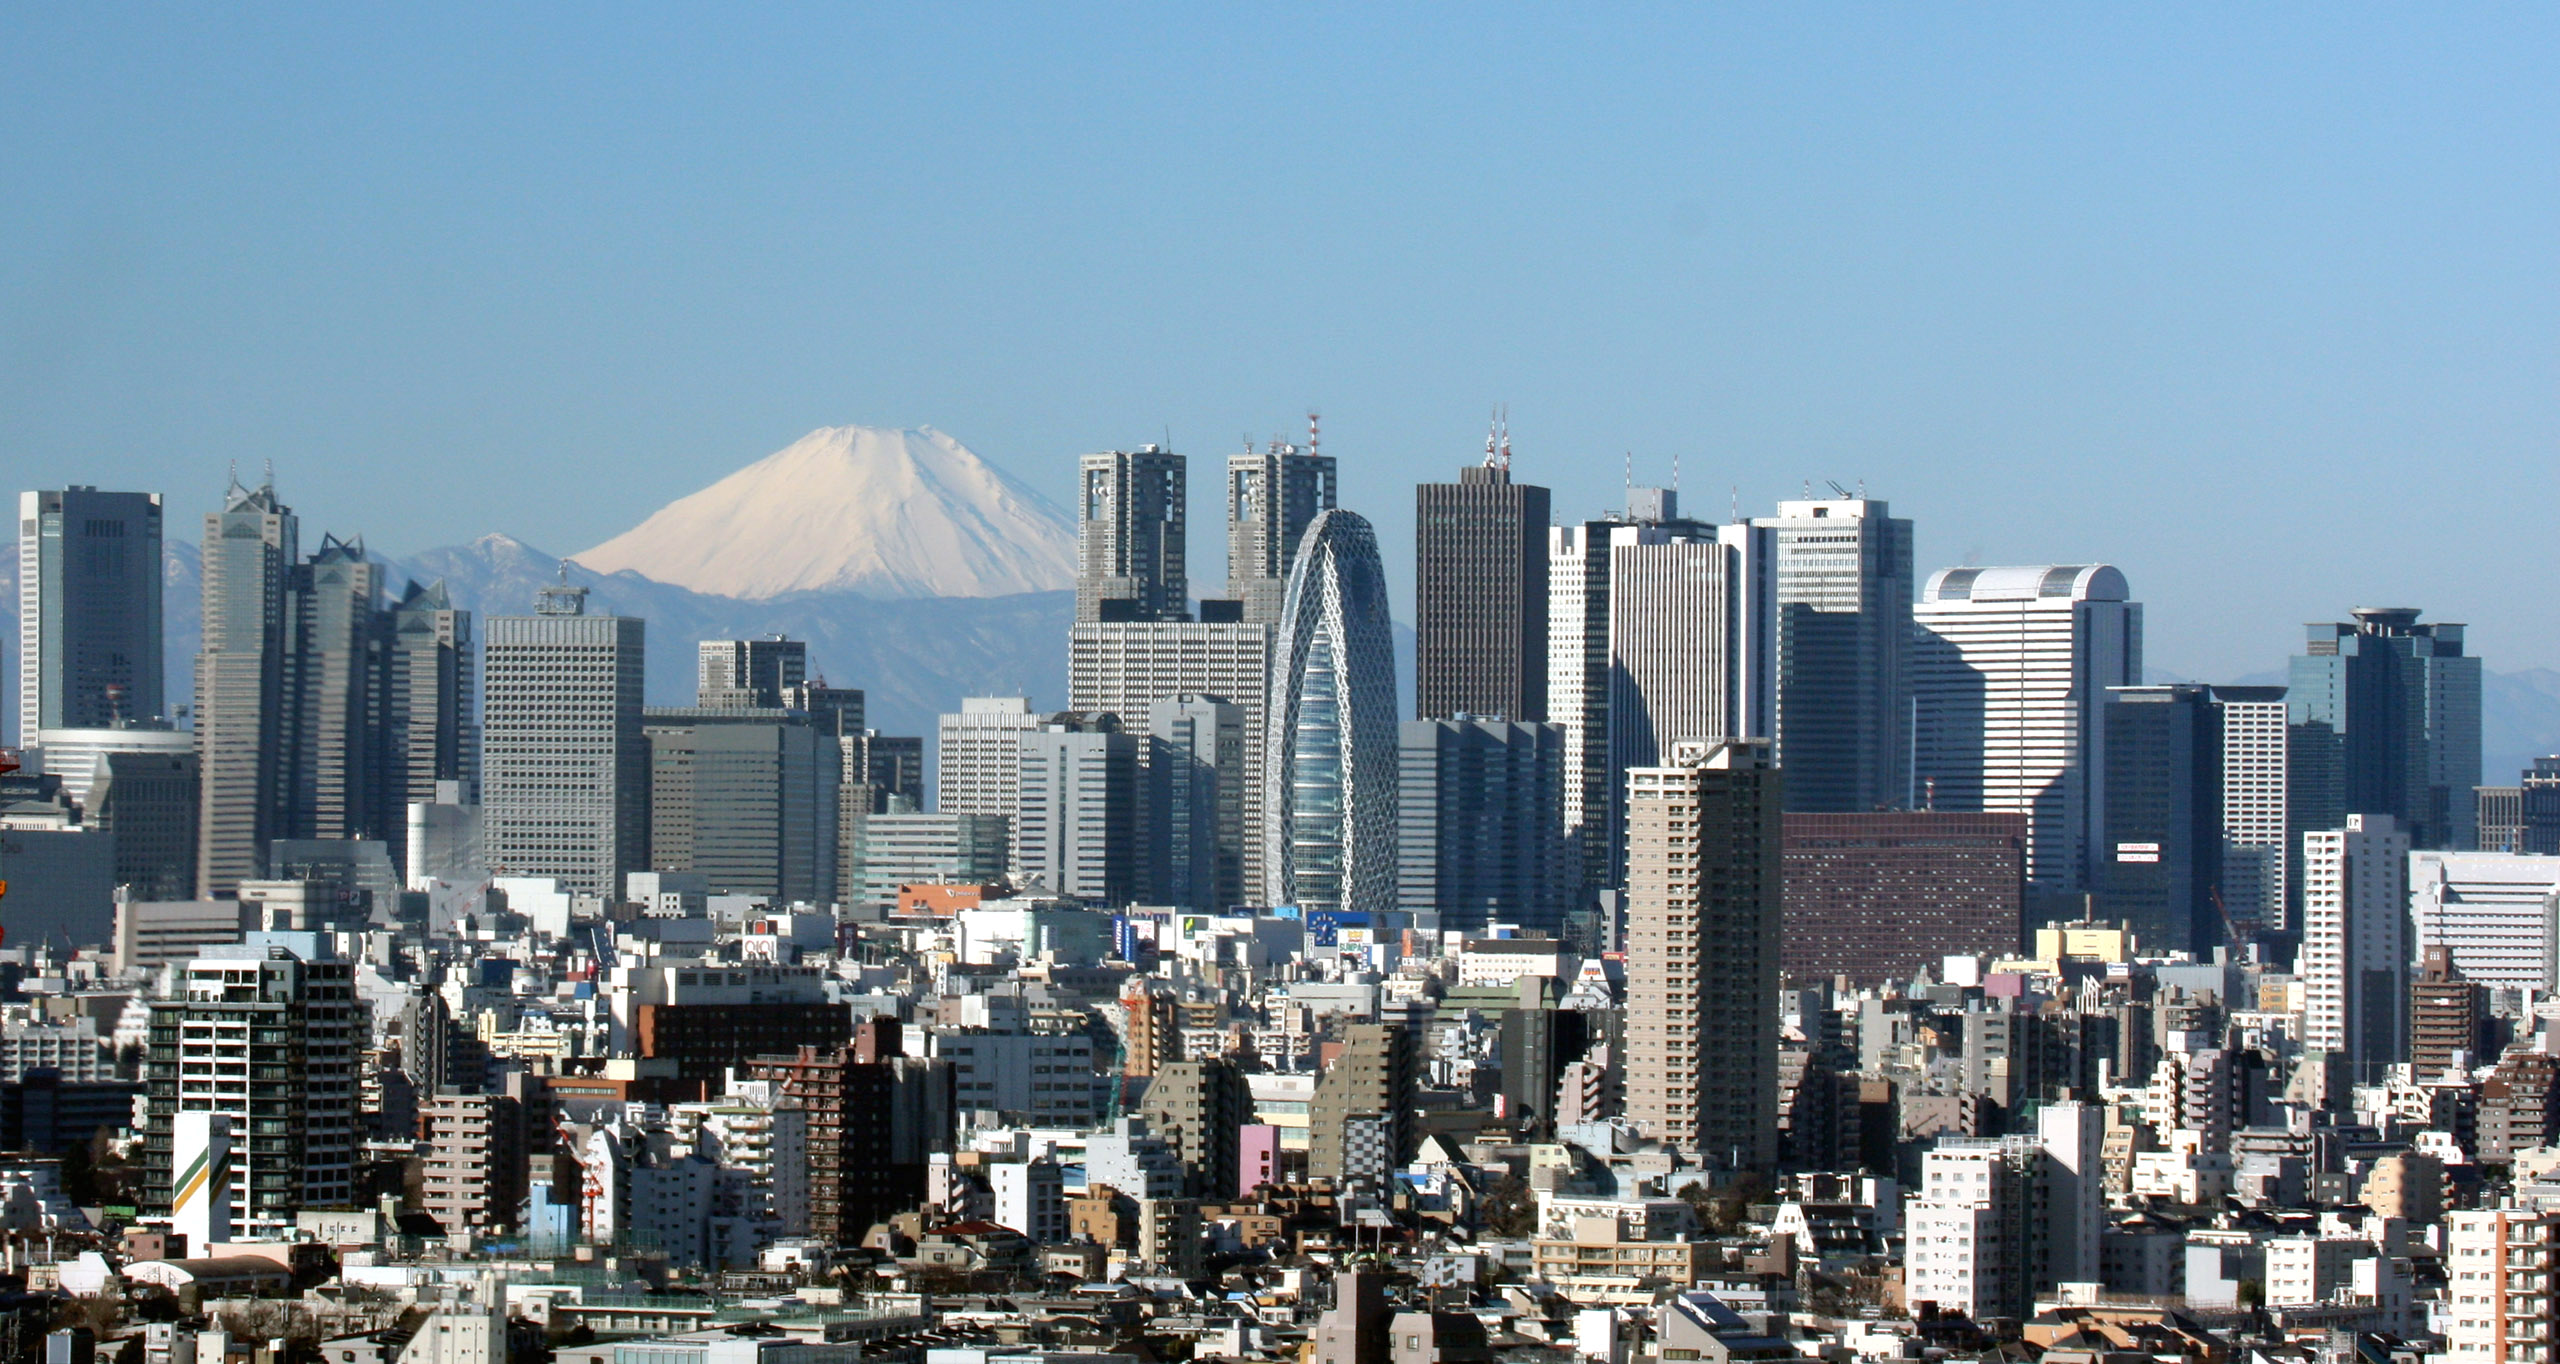 https://upload.wikimedia.org/wikipedia/commons/b/b2/Skyscrapers_of_Shinjuku_2009_January.jpg